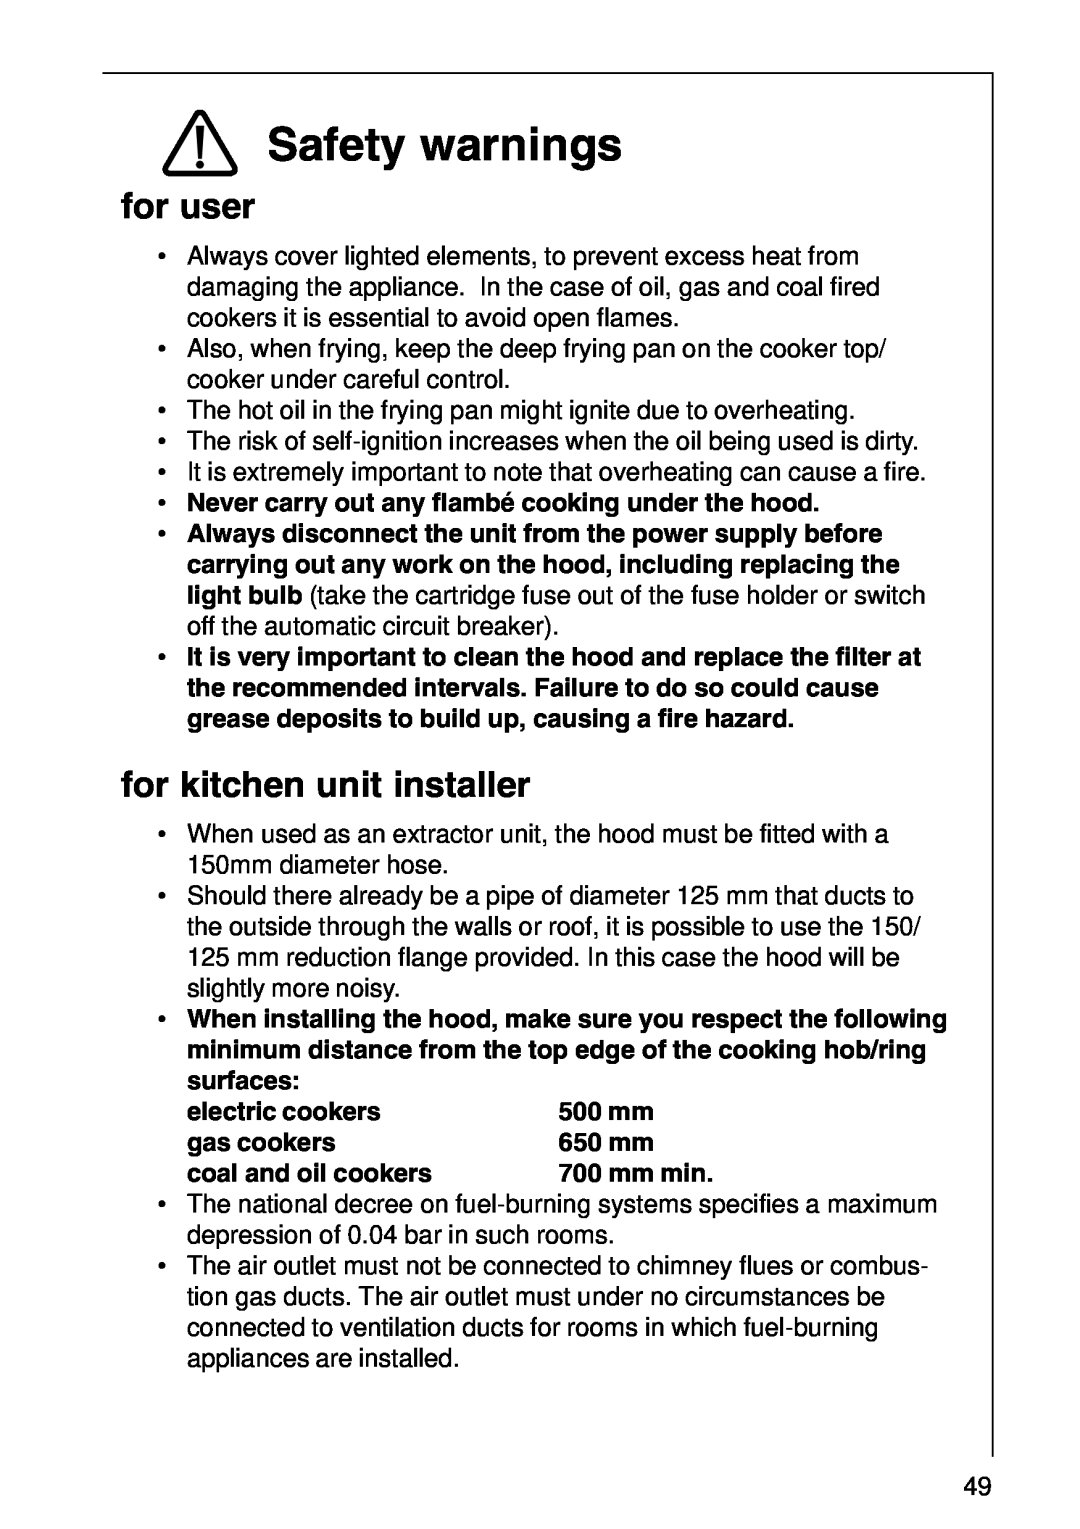 AEG 2490 D, 2460 D installation instructions Safety warnings, for user, for kitchen unit installer 